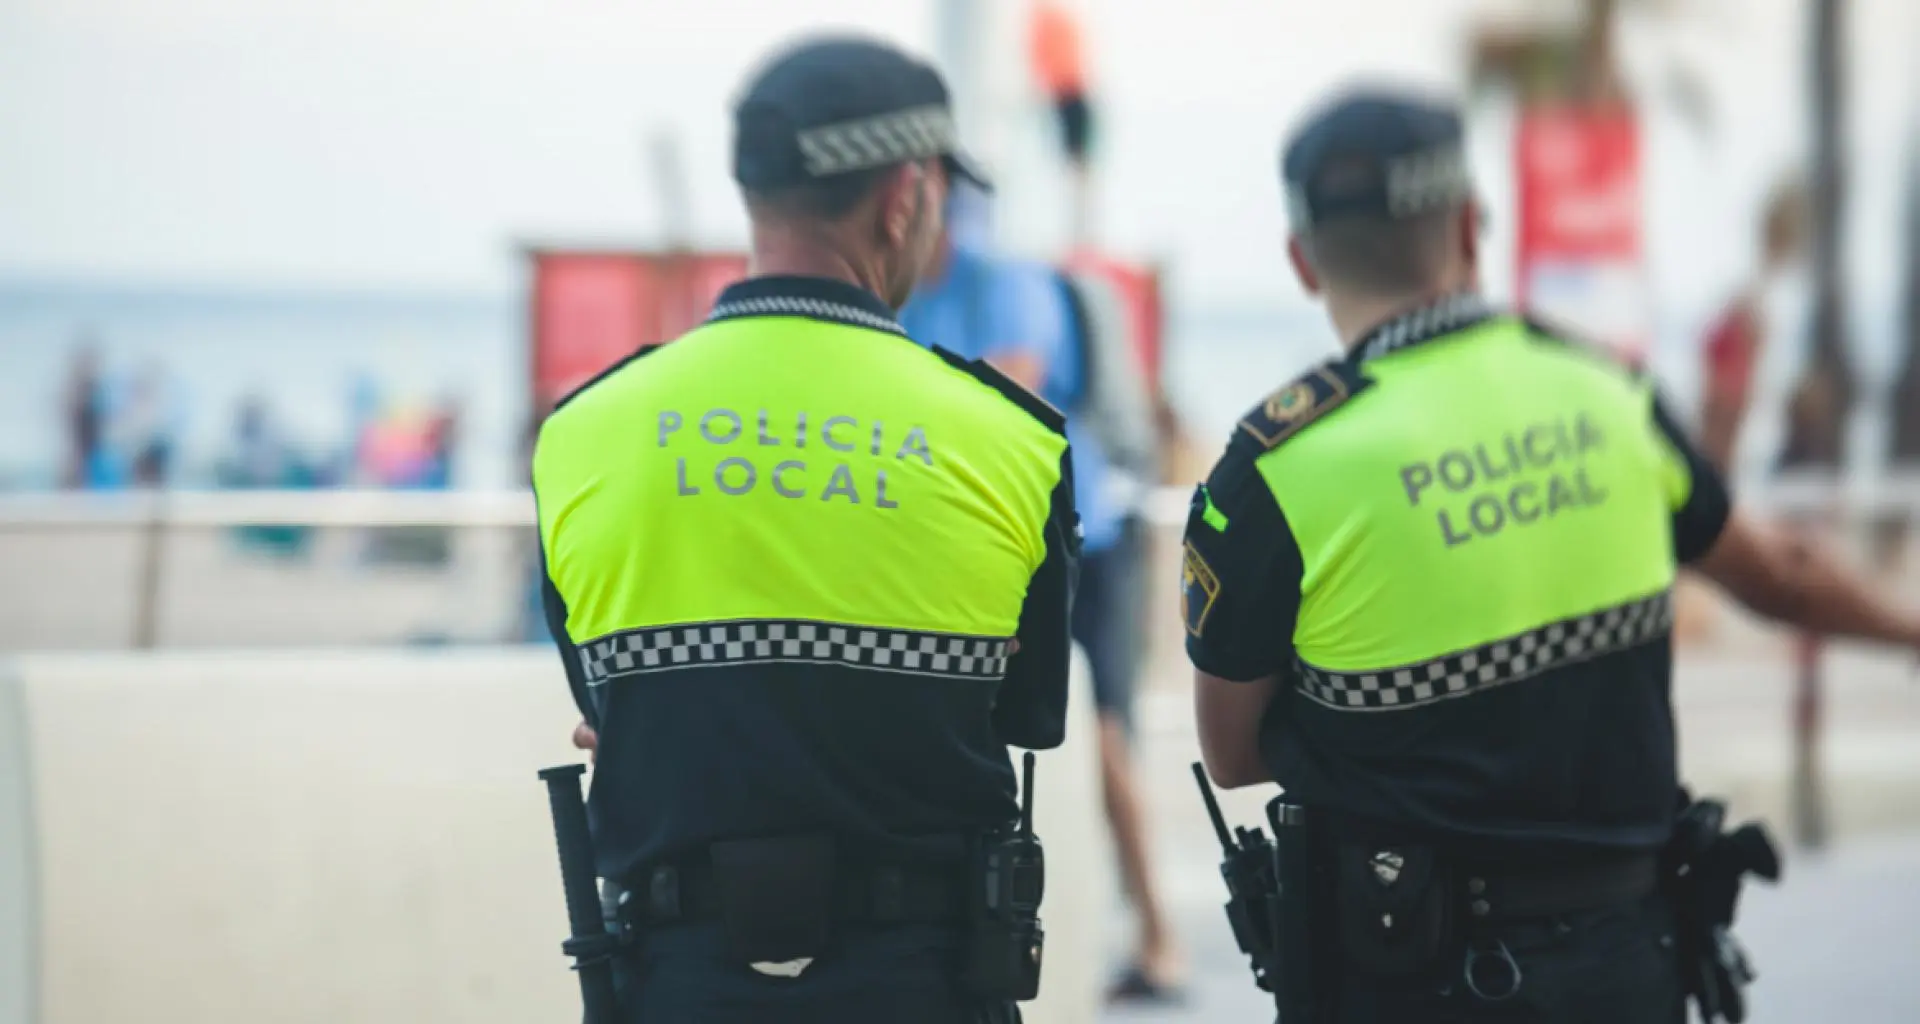 Examen policia local 2020. PDF. 200 preguntas